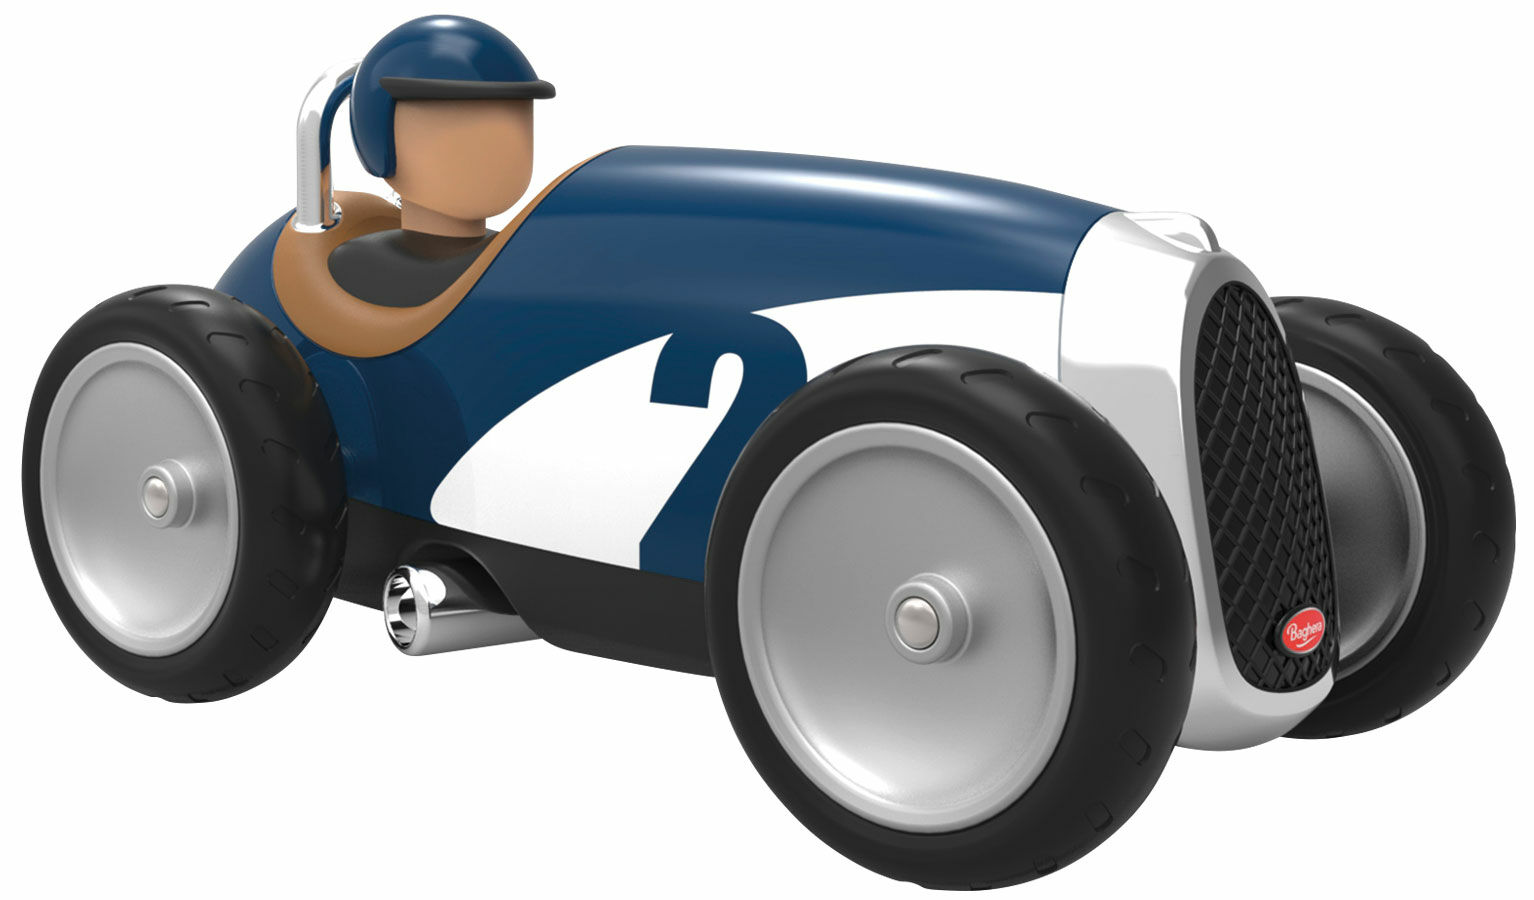 Speelgoedauto "Racing Car", blauwe versie von Baghera